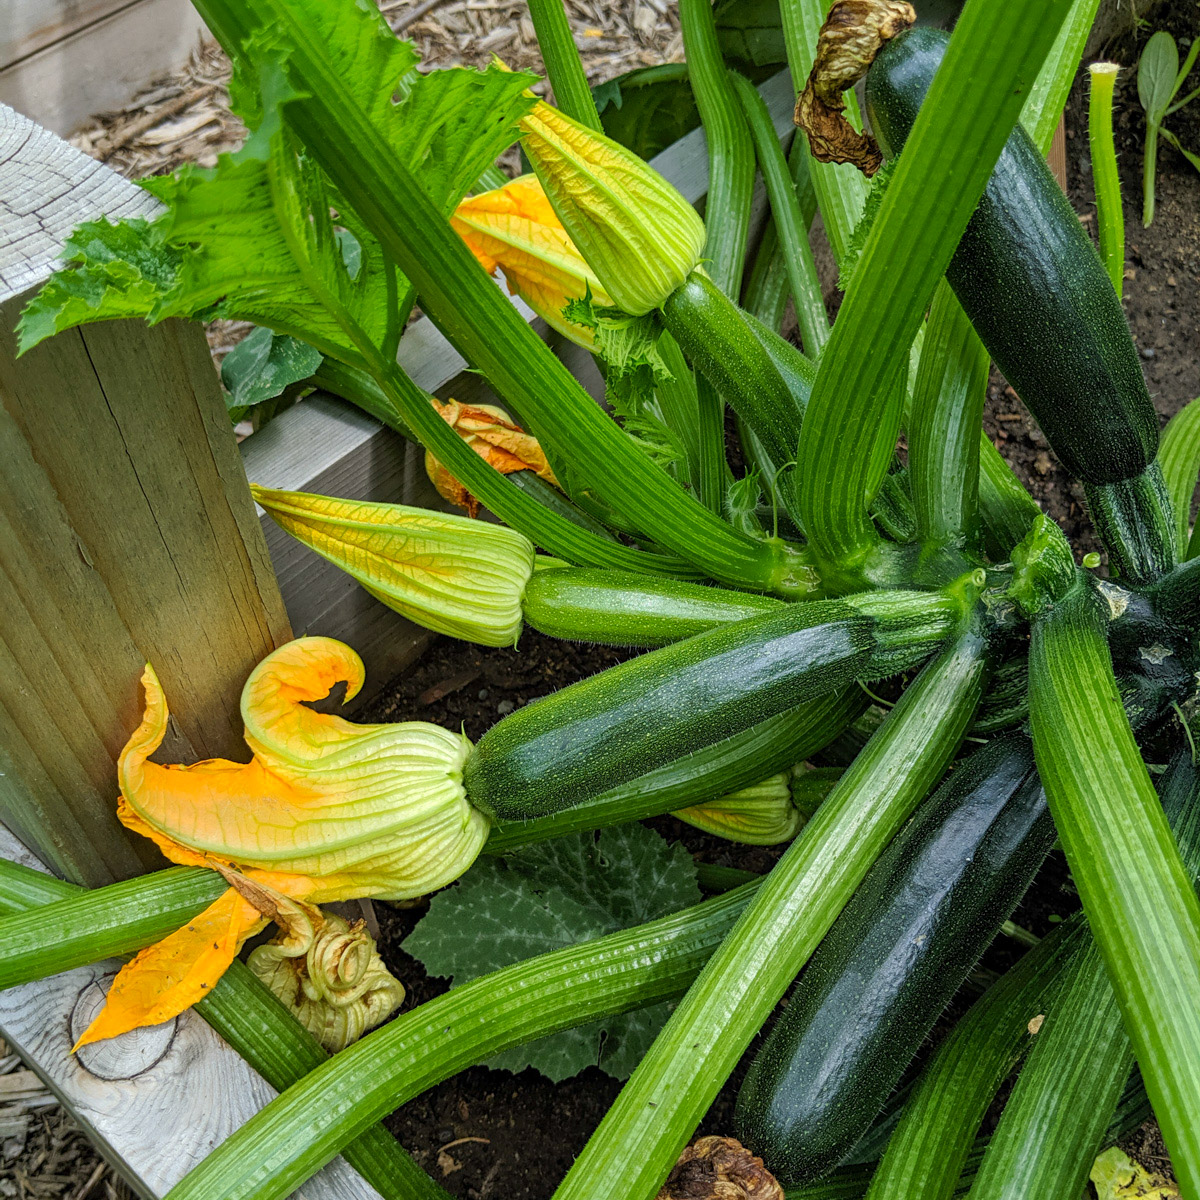 A garden zucchini plant with several zucchini ready to pick.